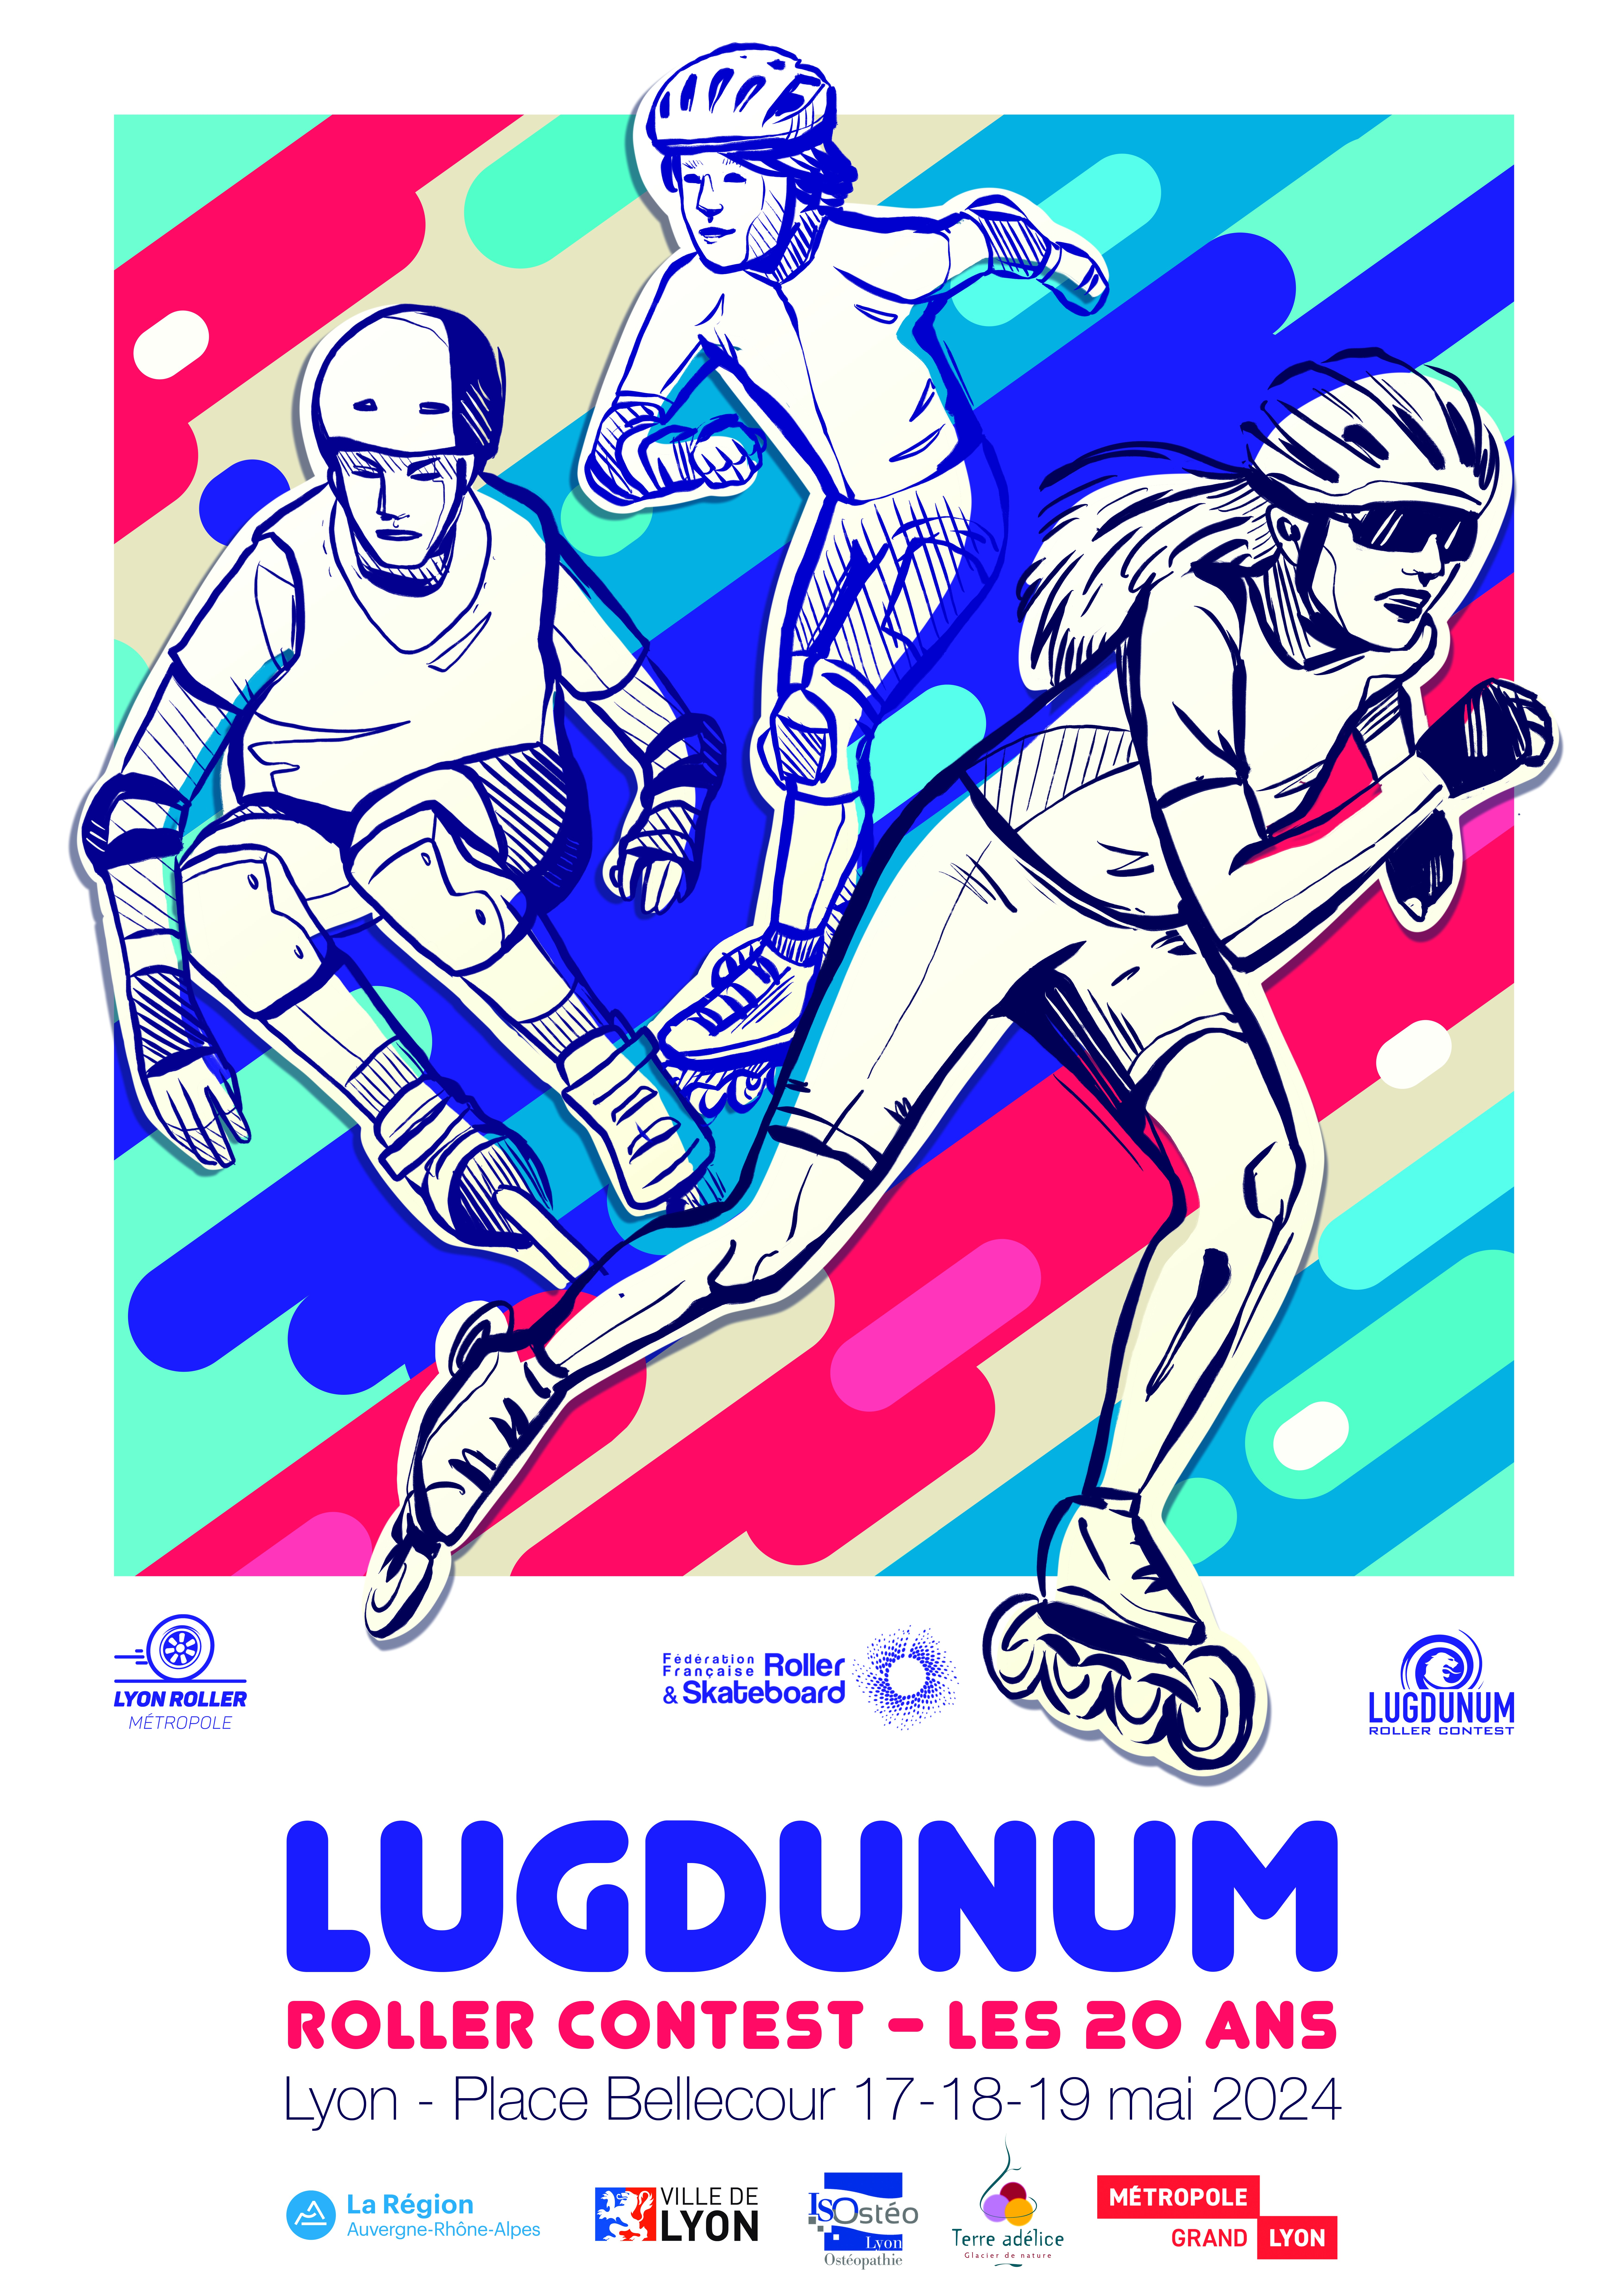 LUGDUNUM Moovride official partner! Lyon, France!